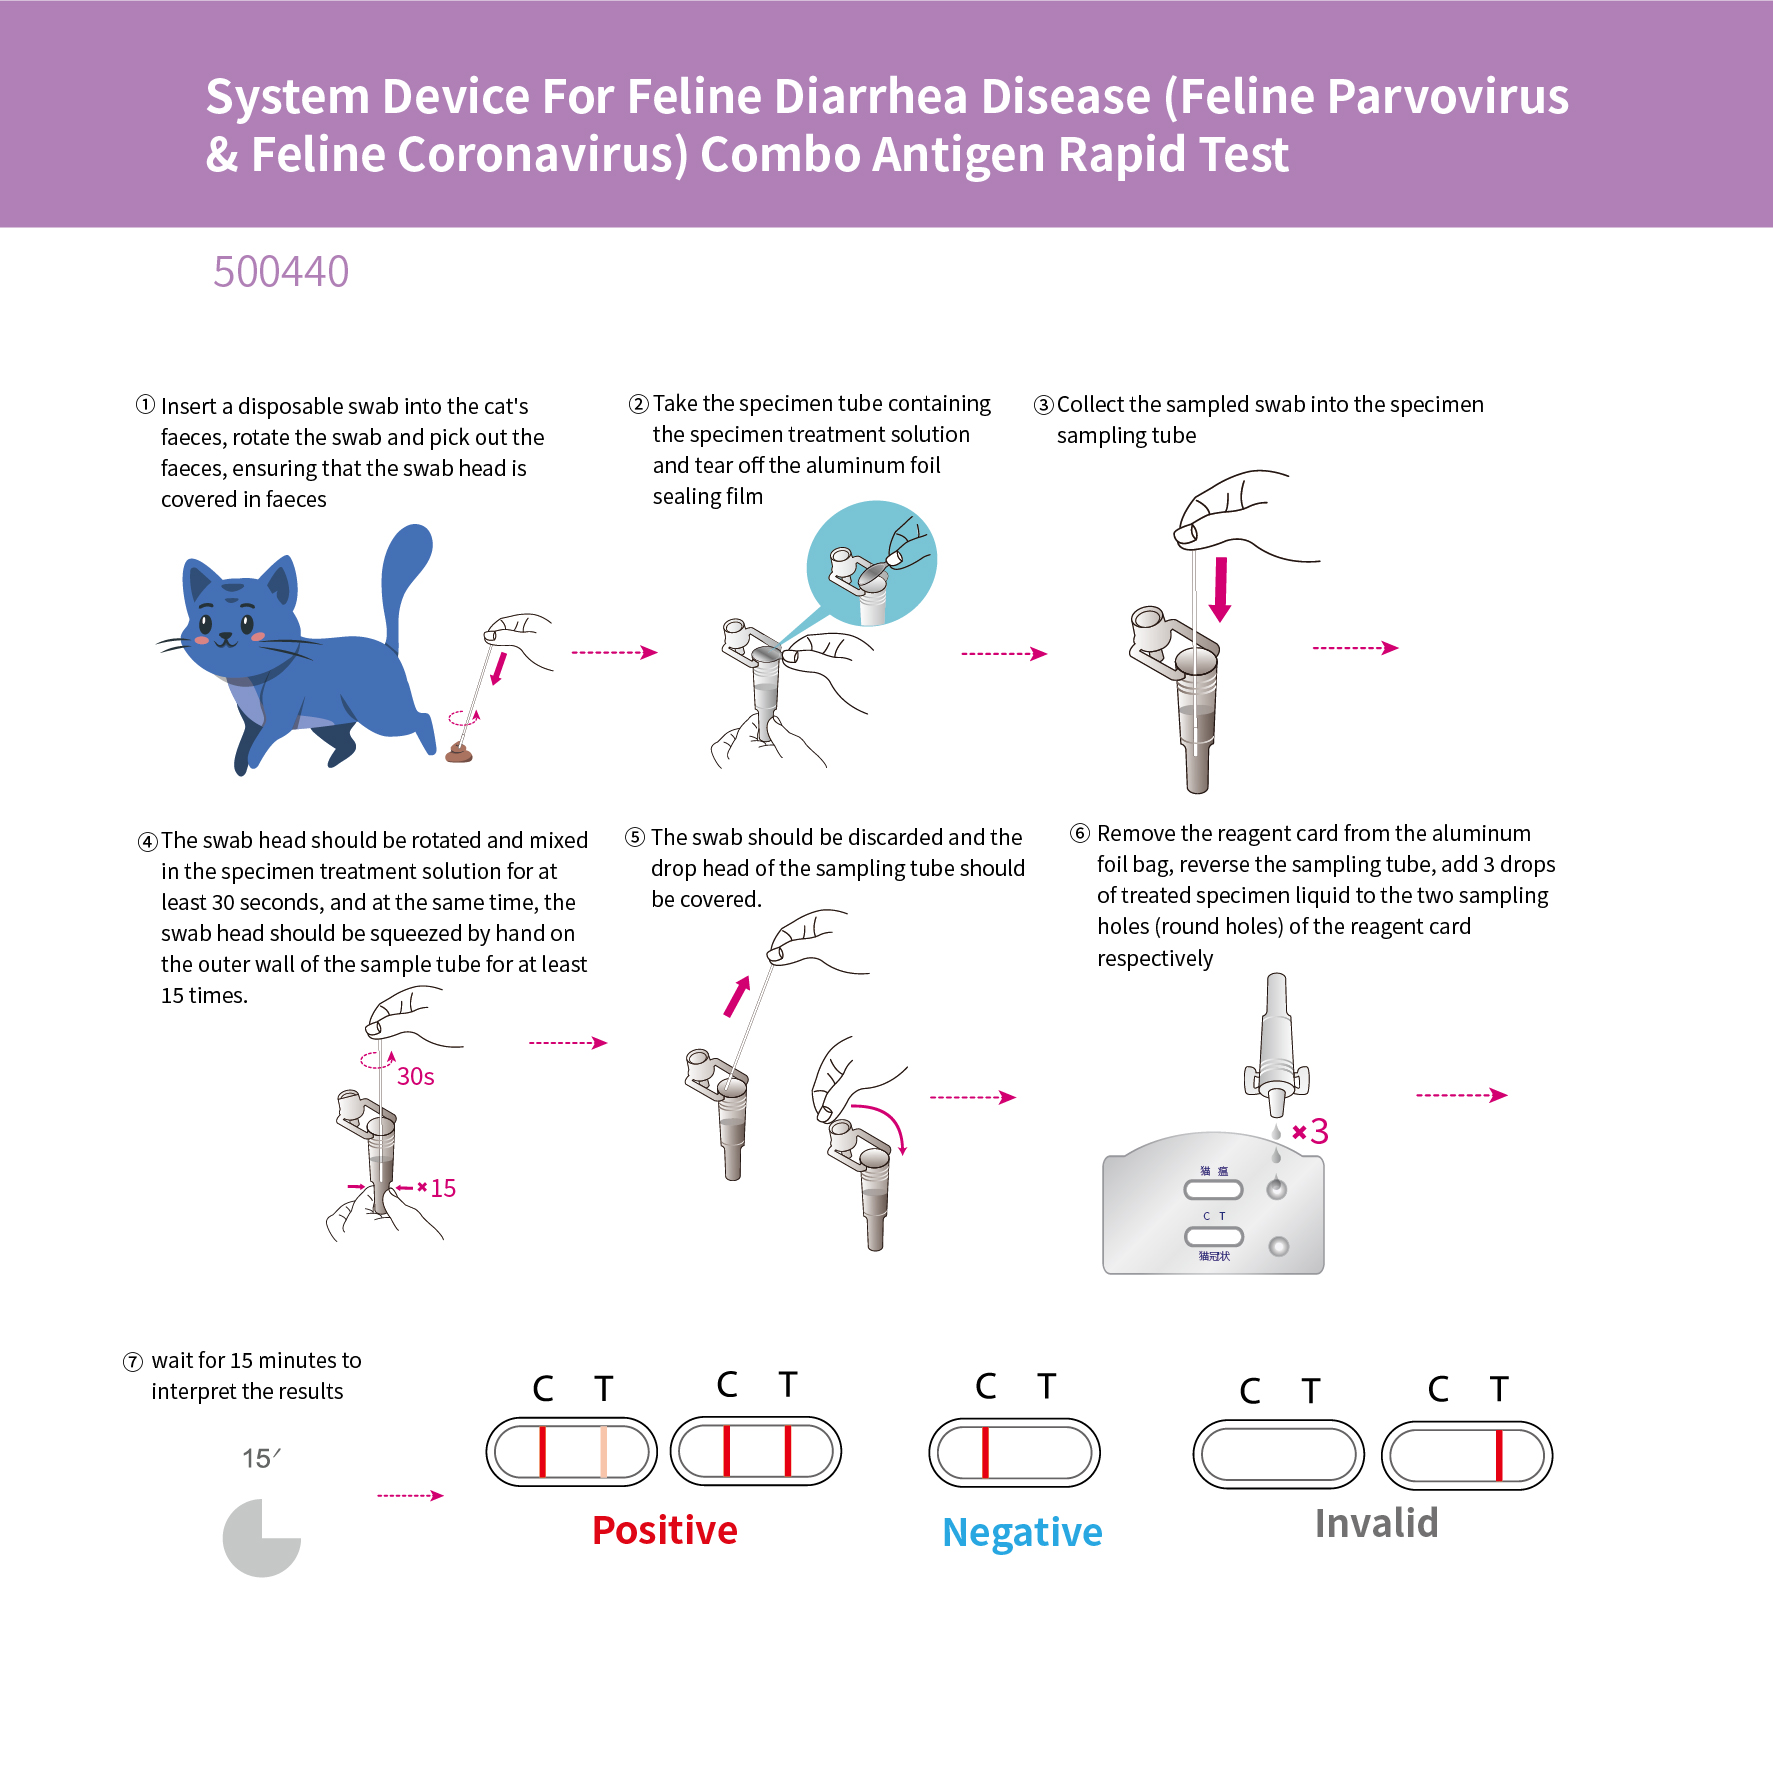 System Device For Feline Diarrhea Disease (Feline Parvovirus & Feline Coronavirus) Combo Antigen Rapid Test